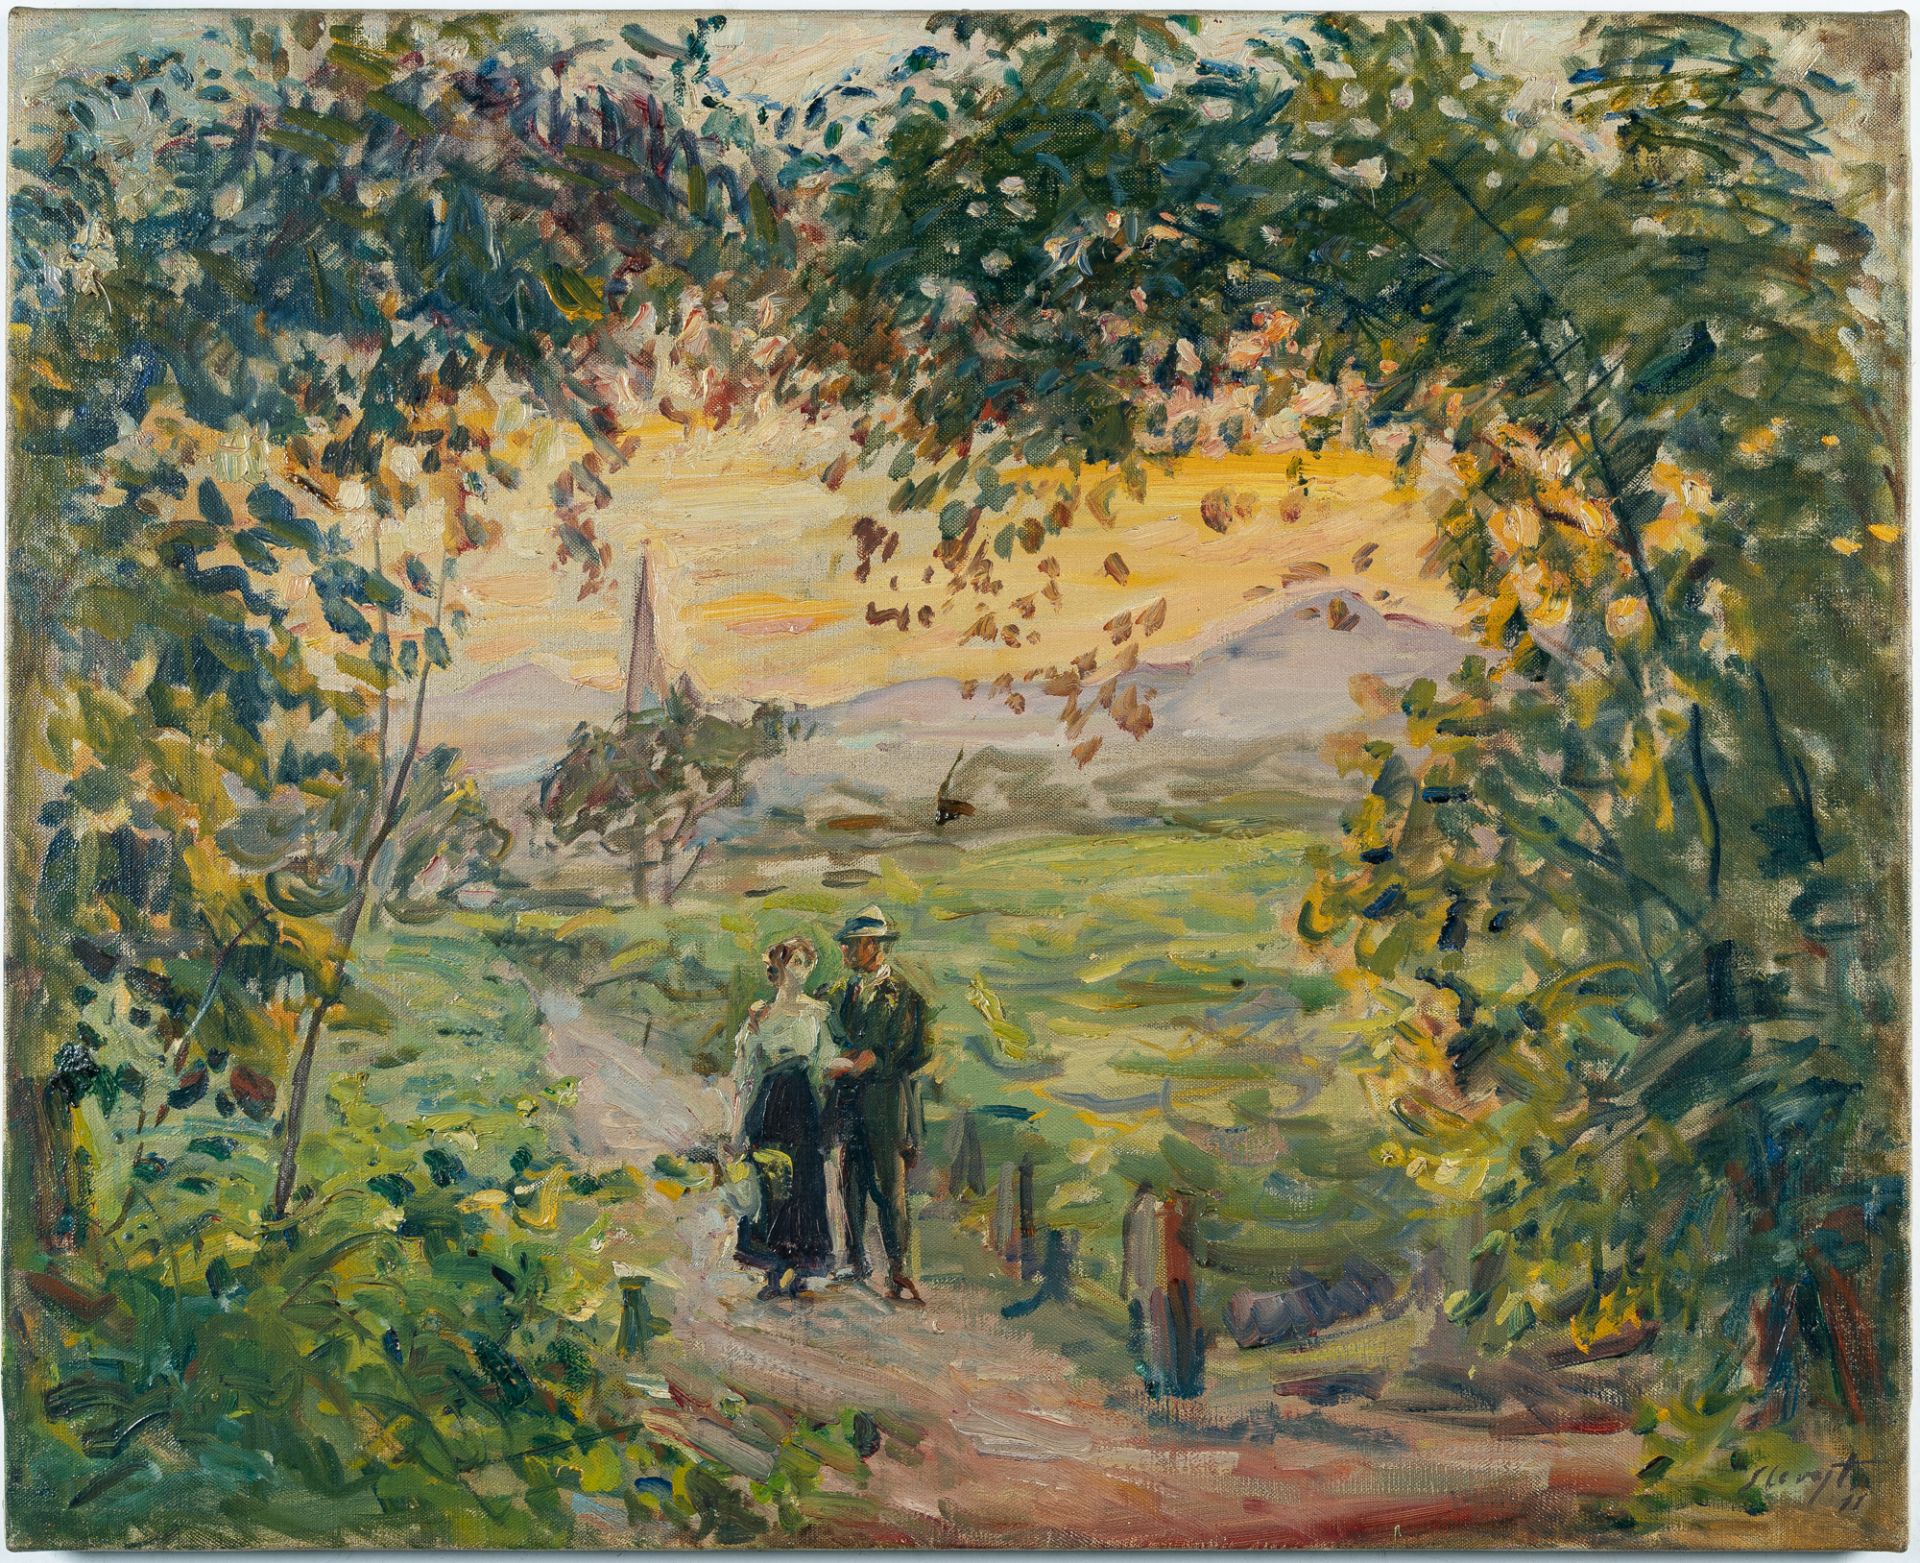 Max Slevogt (1868 Landshut - Neukastel/Pfalz 1932), The walk (Evening scene with a couple / View - Image 2 of 4